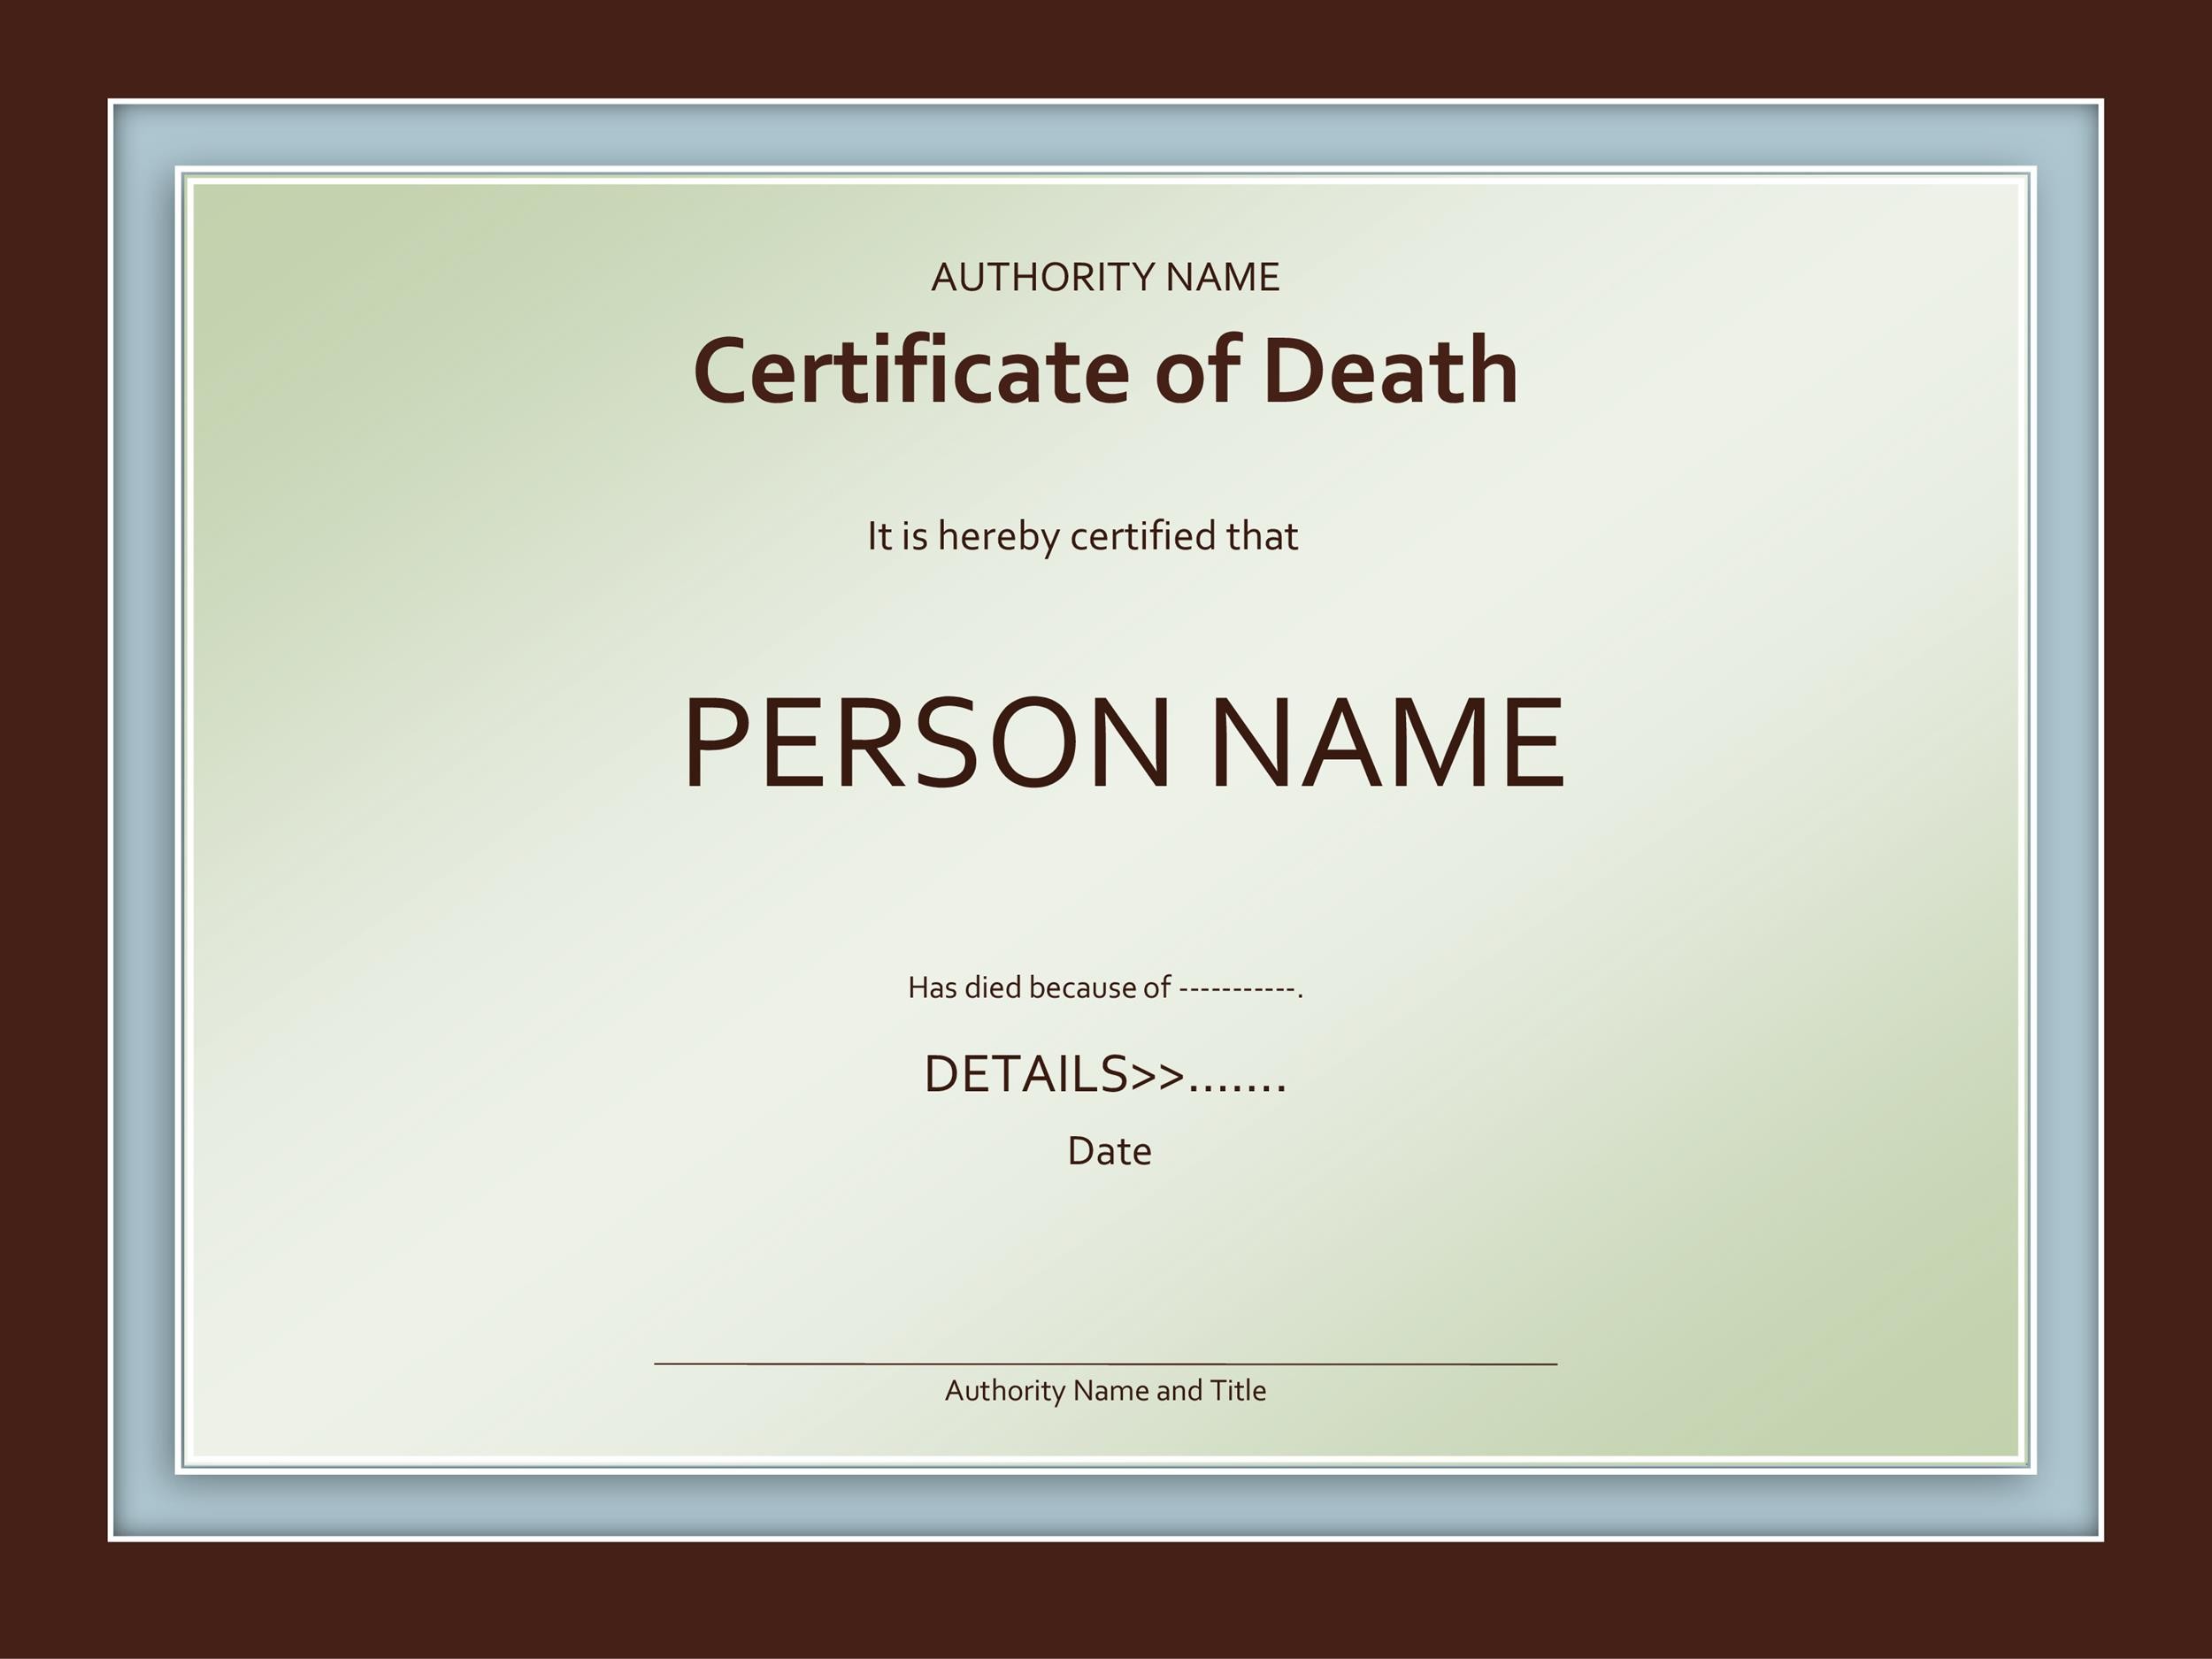 37 Blank Death Certificate Templates [100 FREE] ᐅ TemplateLab